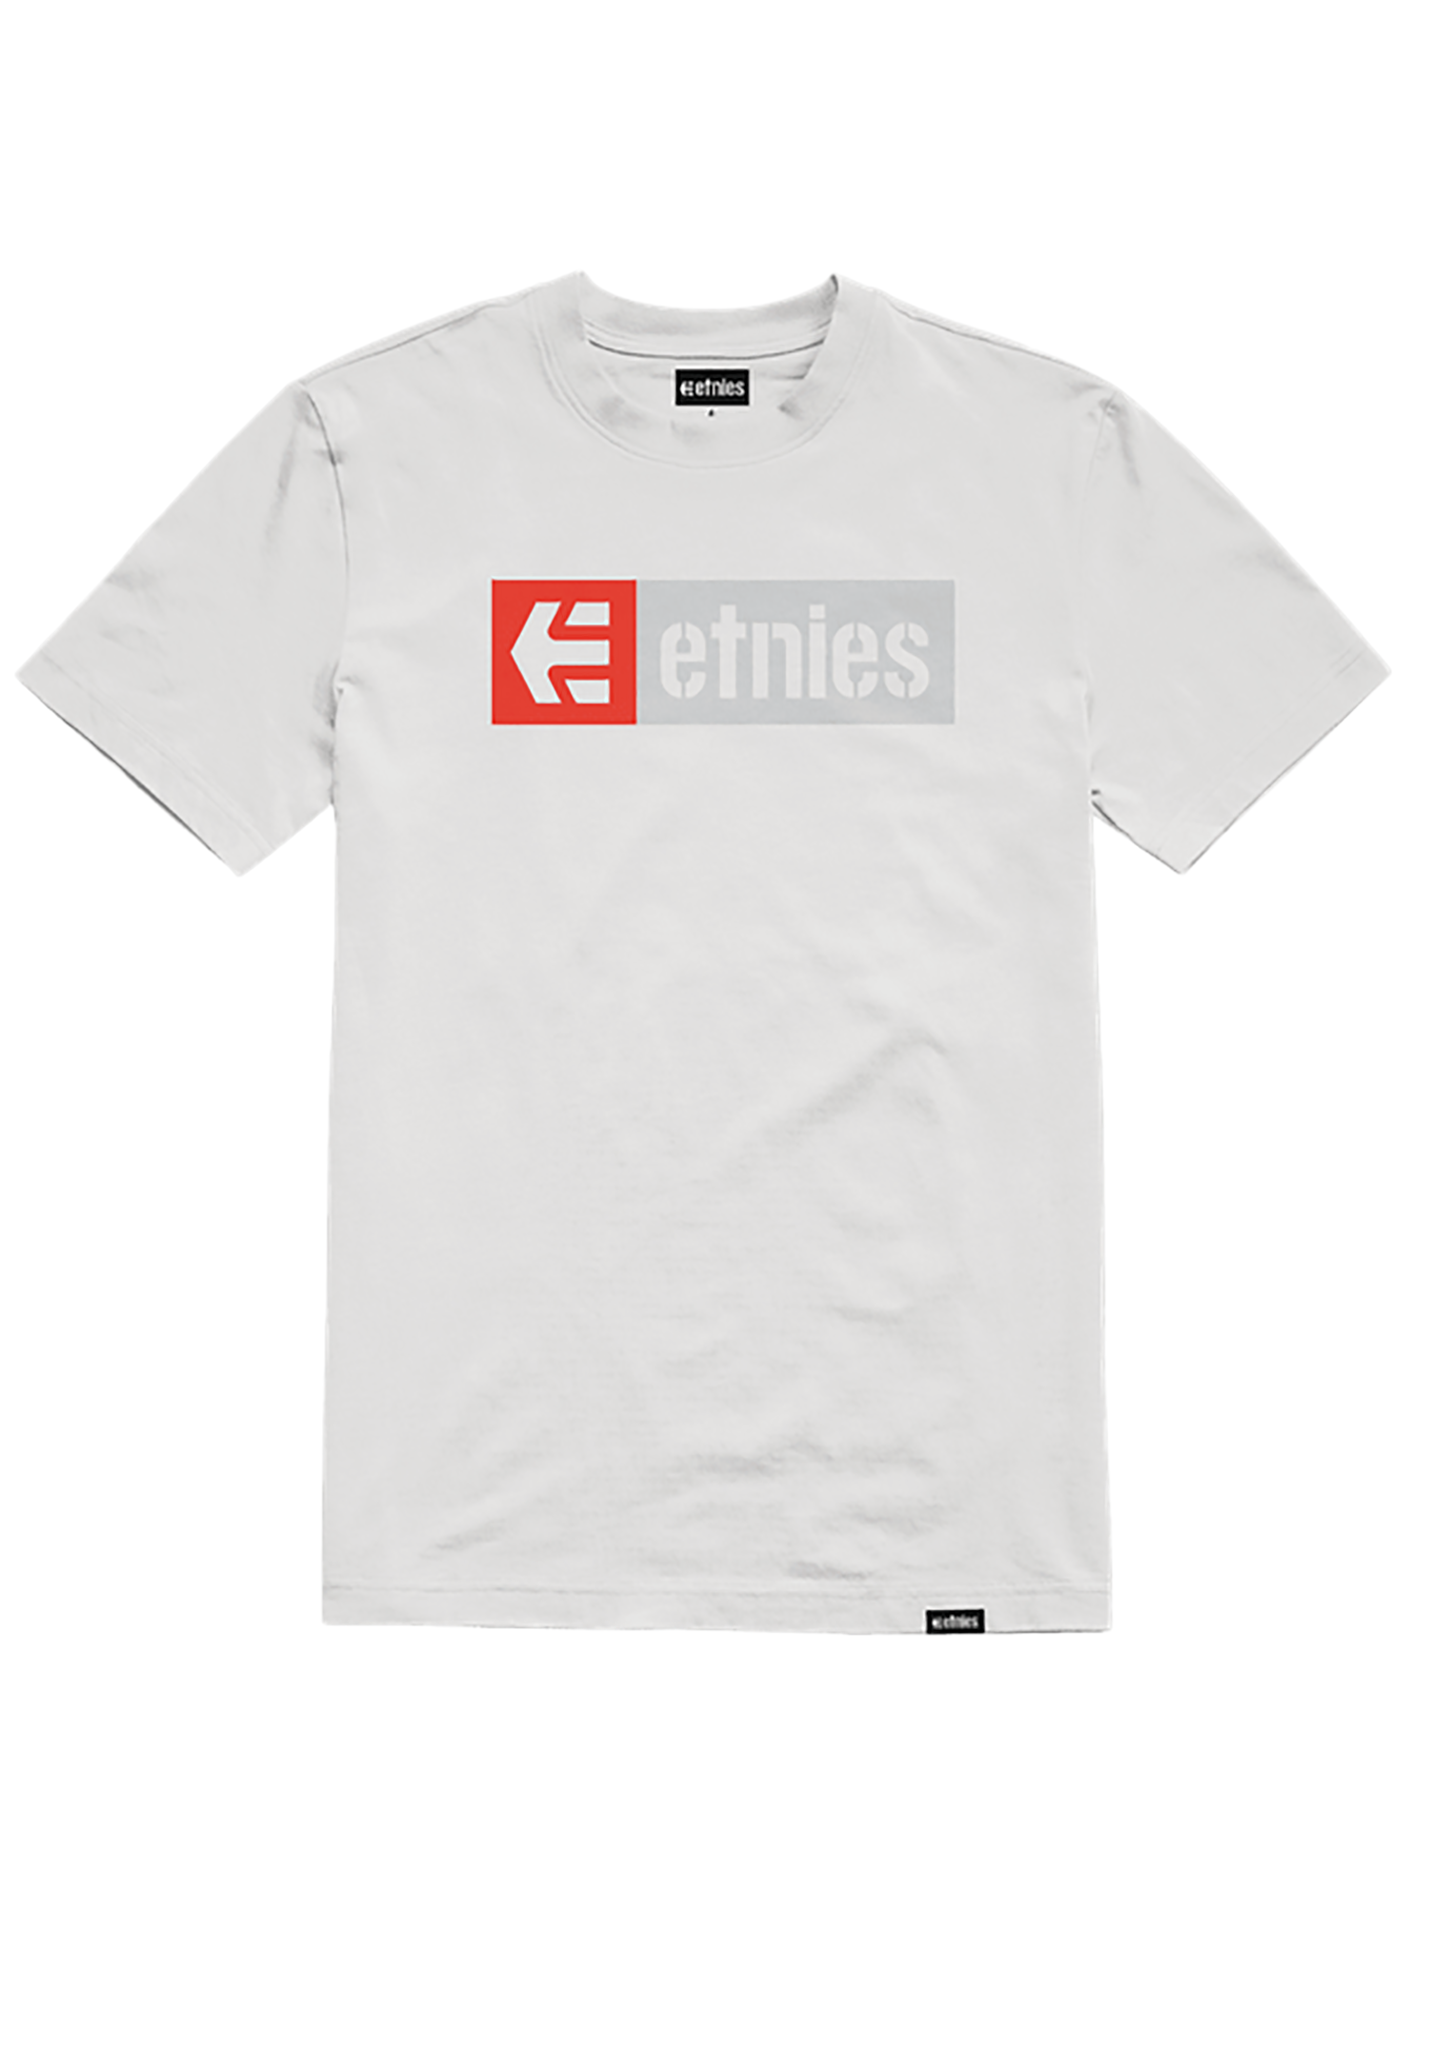 Etnies New Box T-Shirt weiß/grau/rot L